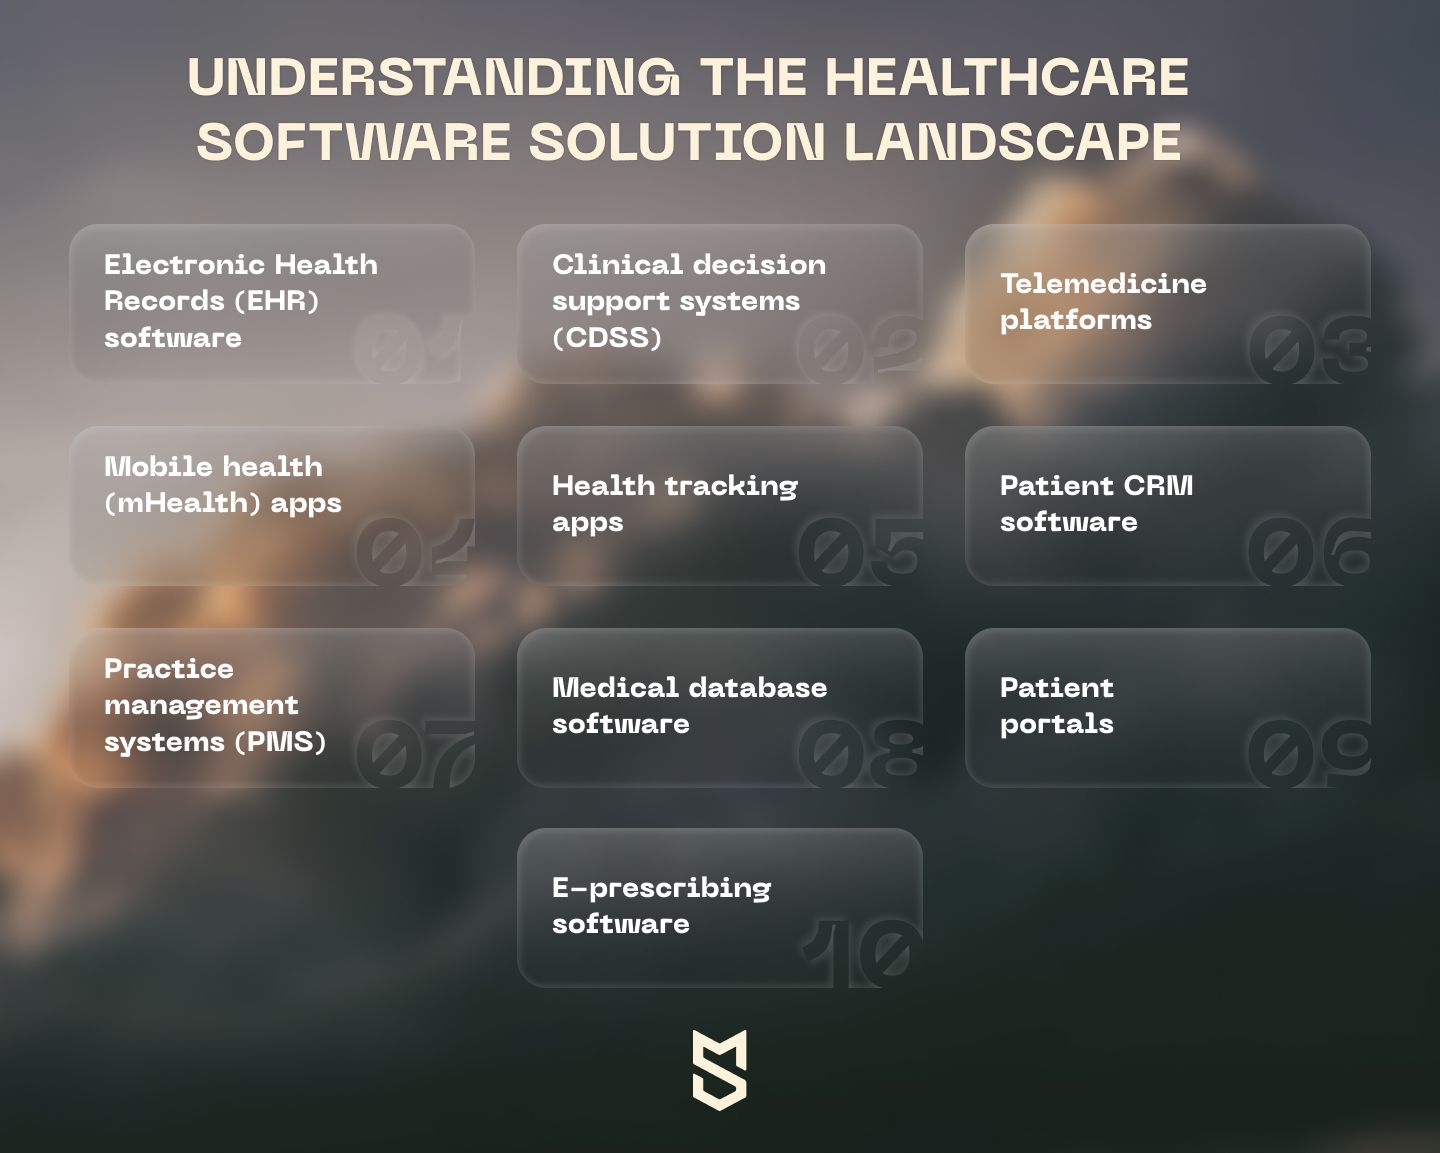 The healthcare software landscape